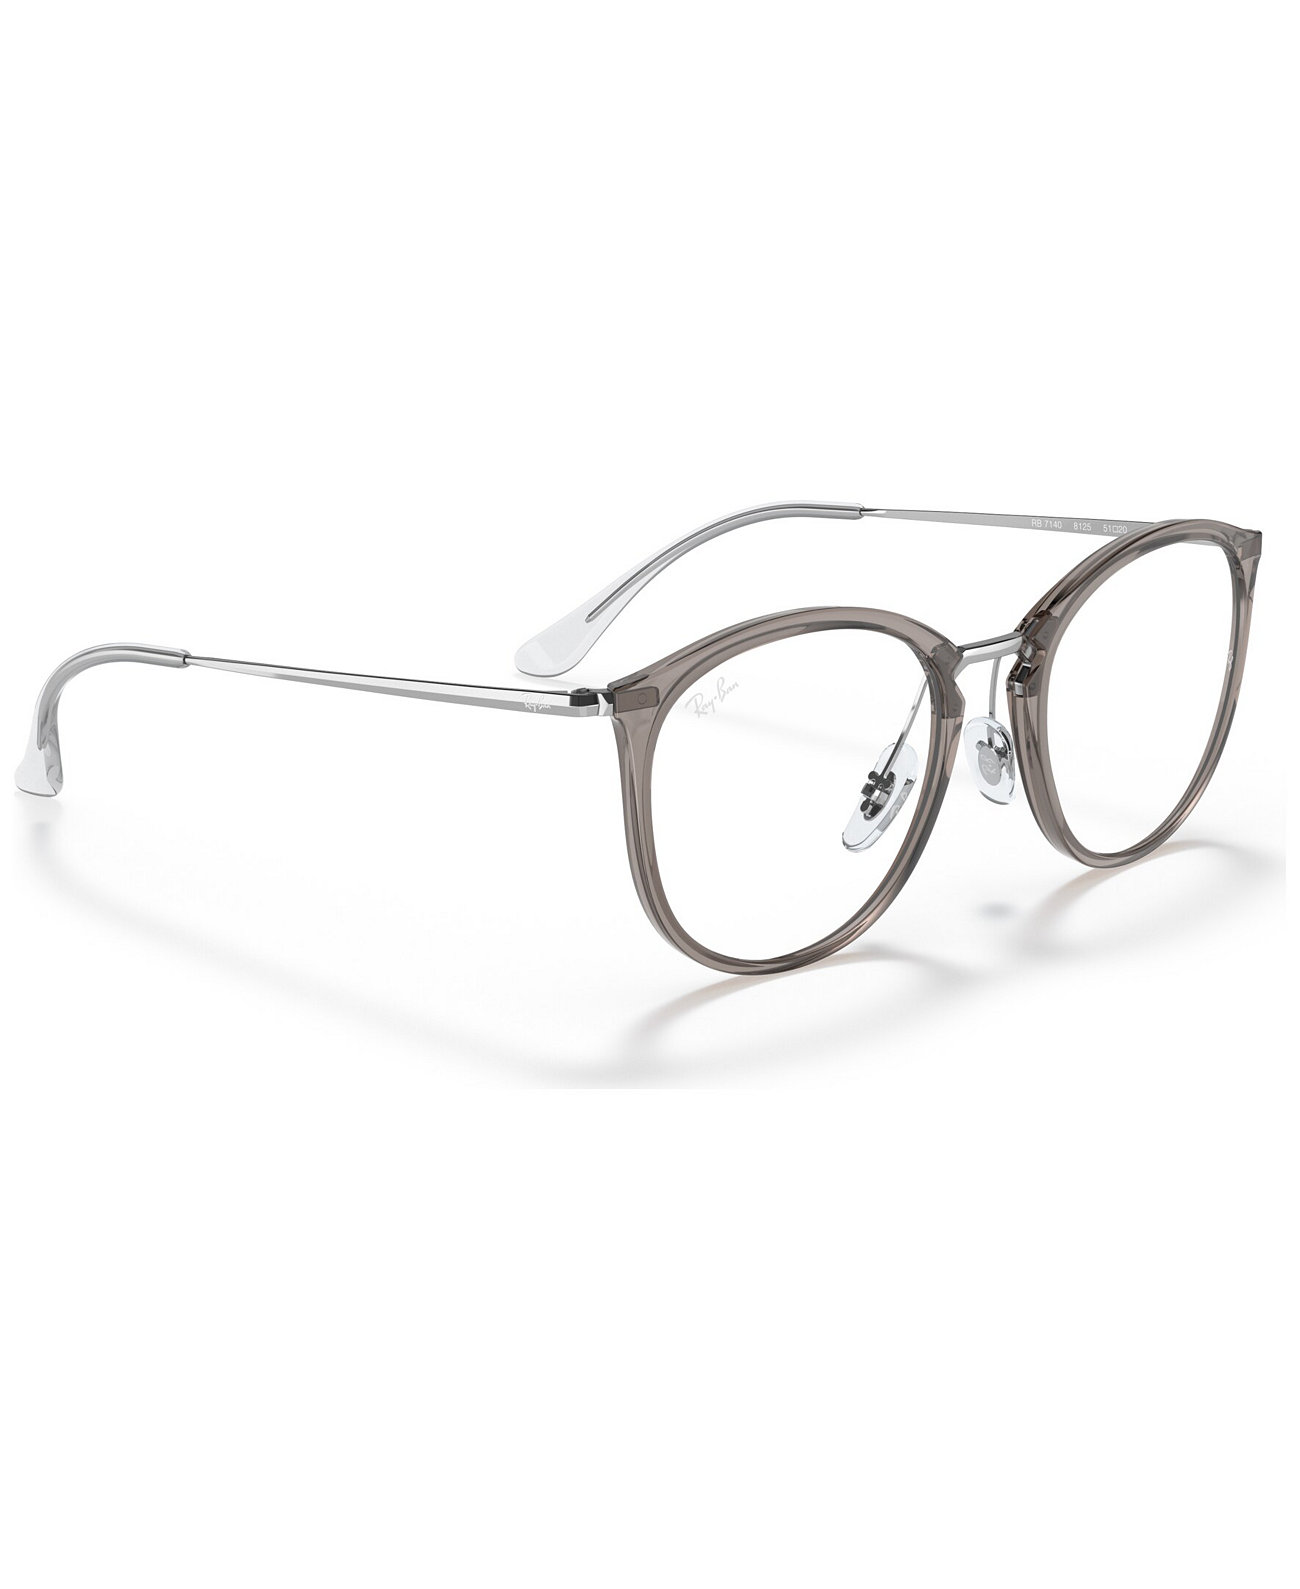 Women's Eyeglasses, RB7140 51 Ray-Ban